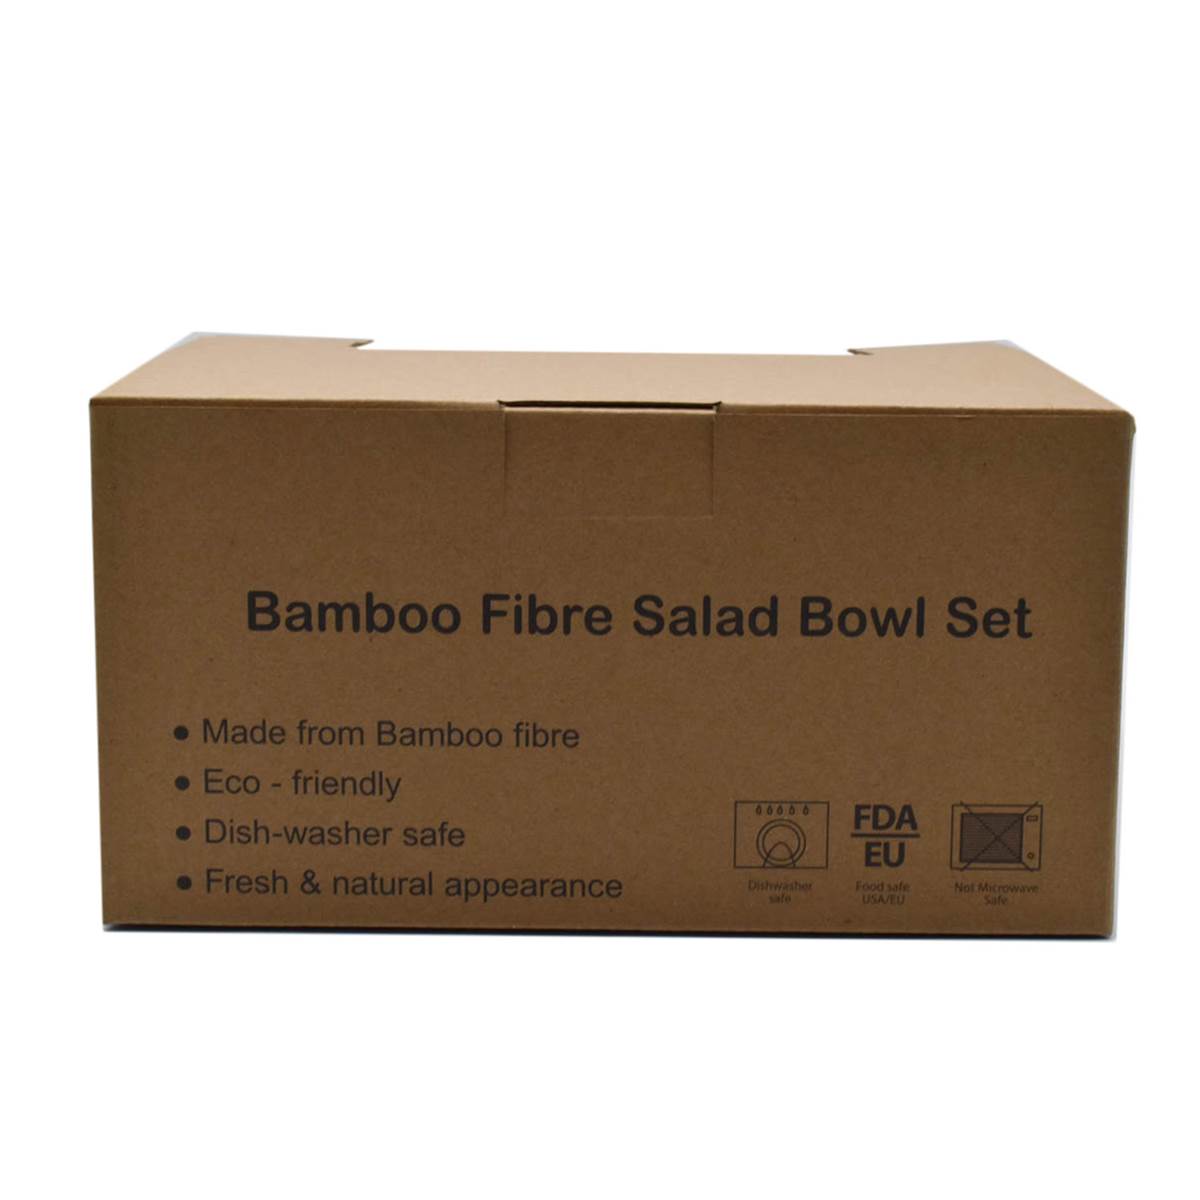 Bamboo Fibre Bowl Set with 5 Bowls, 2 Spoons (1532)